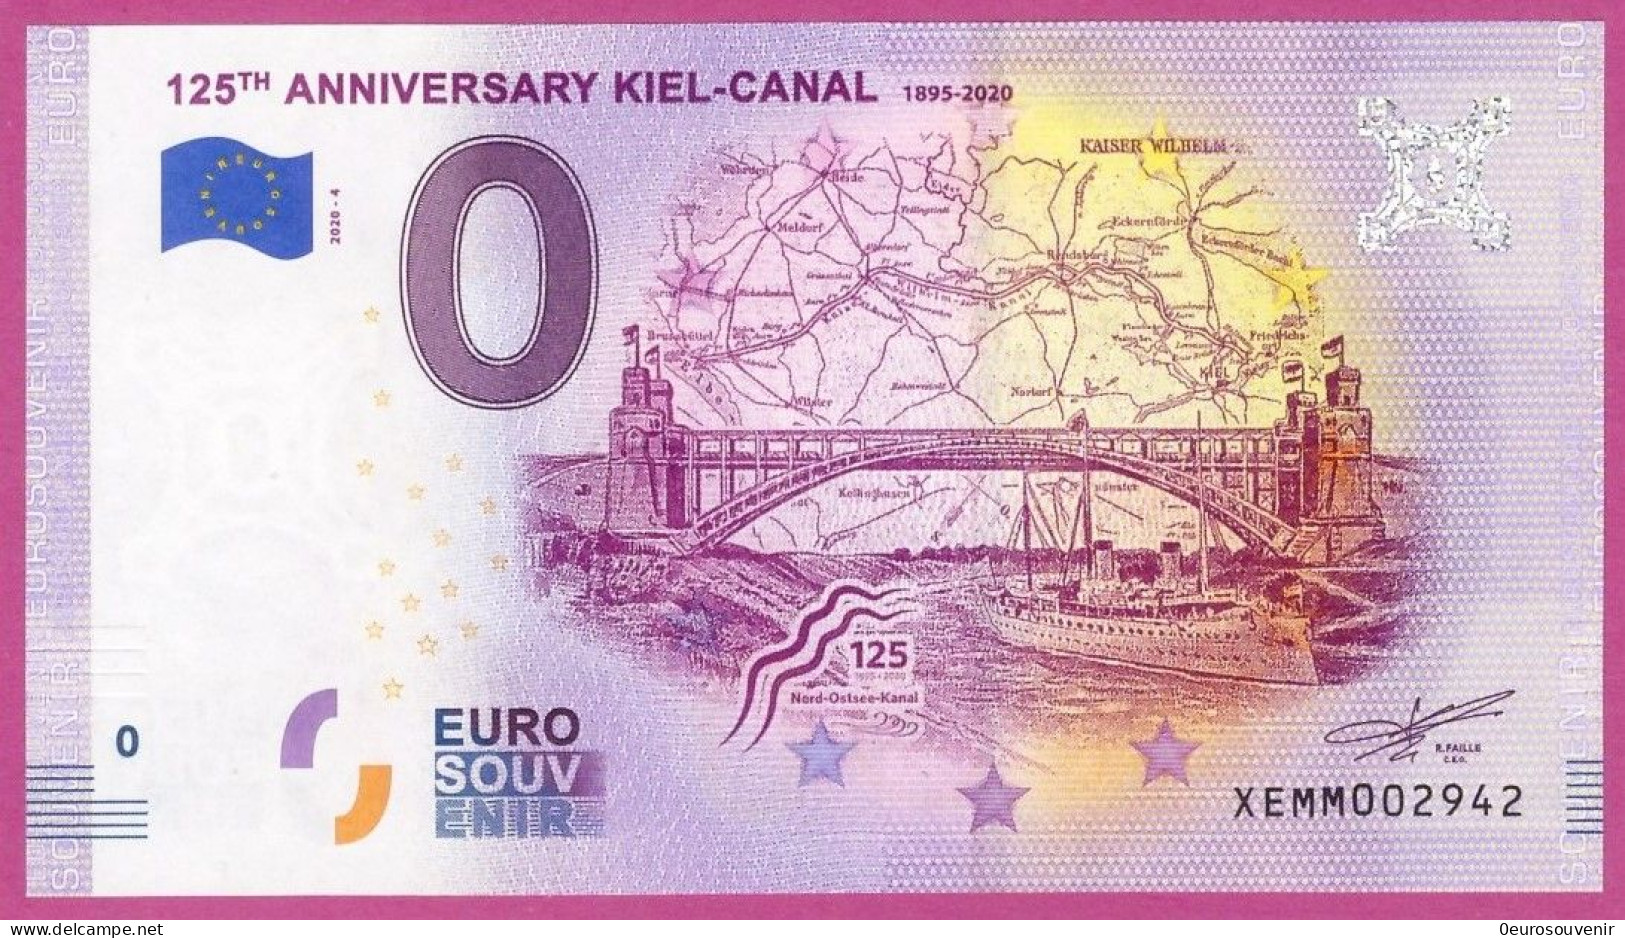 0-Euro XEMM 4 2020 125TH ANNIVERSARY KIEL-CANAL - YACHT VOR BRÜCKE - Privatentwürfe